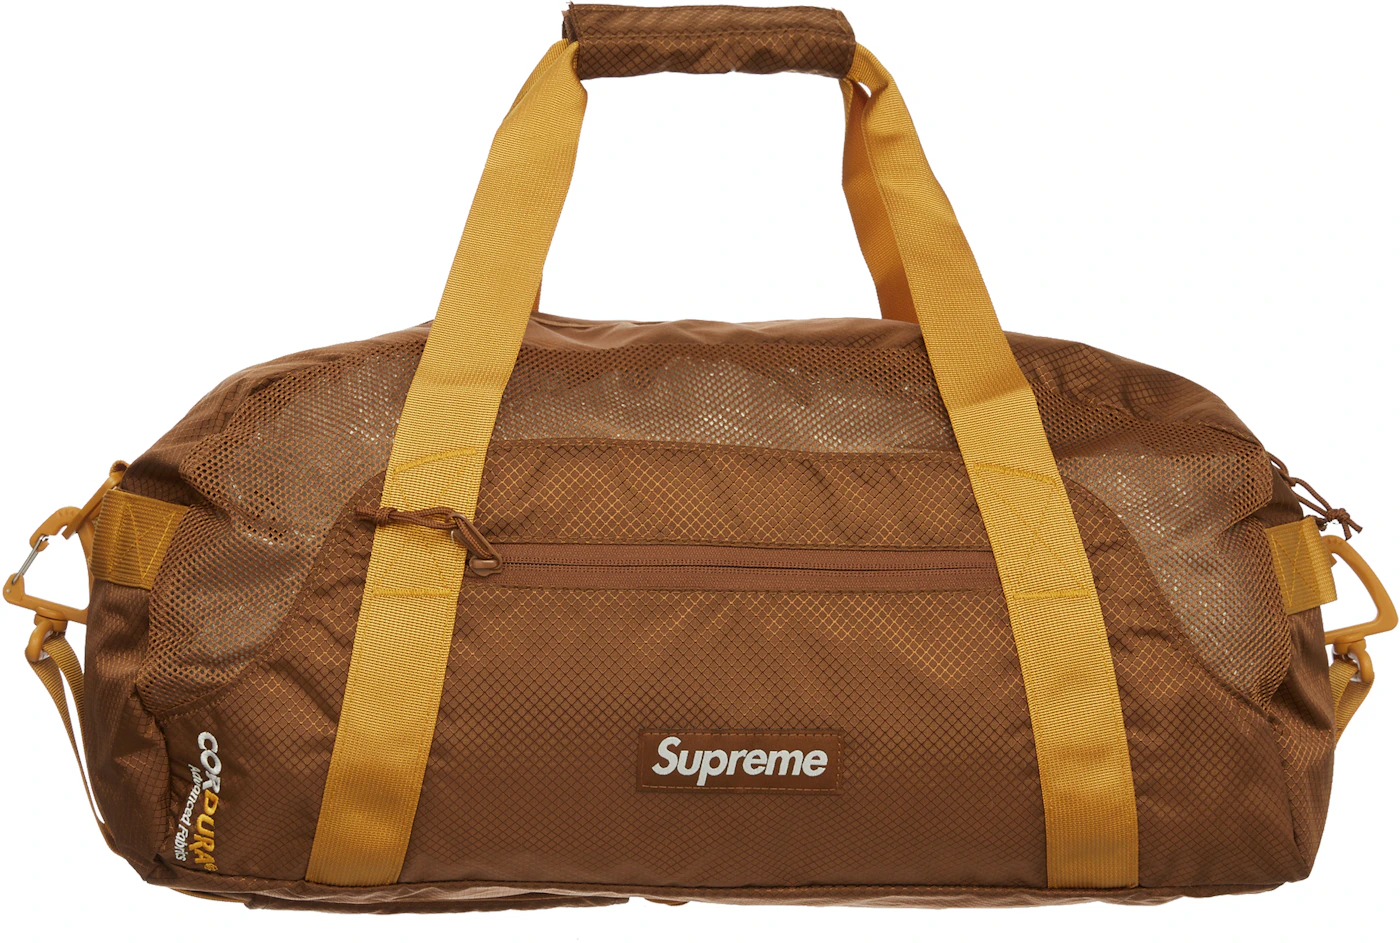 Supreme, Bags, Authentic Supreme Duffle Bag